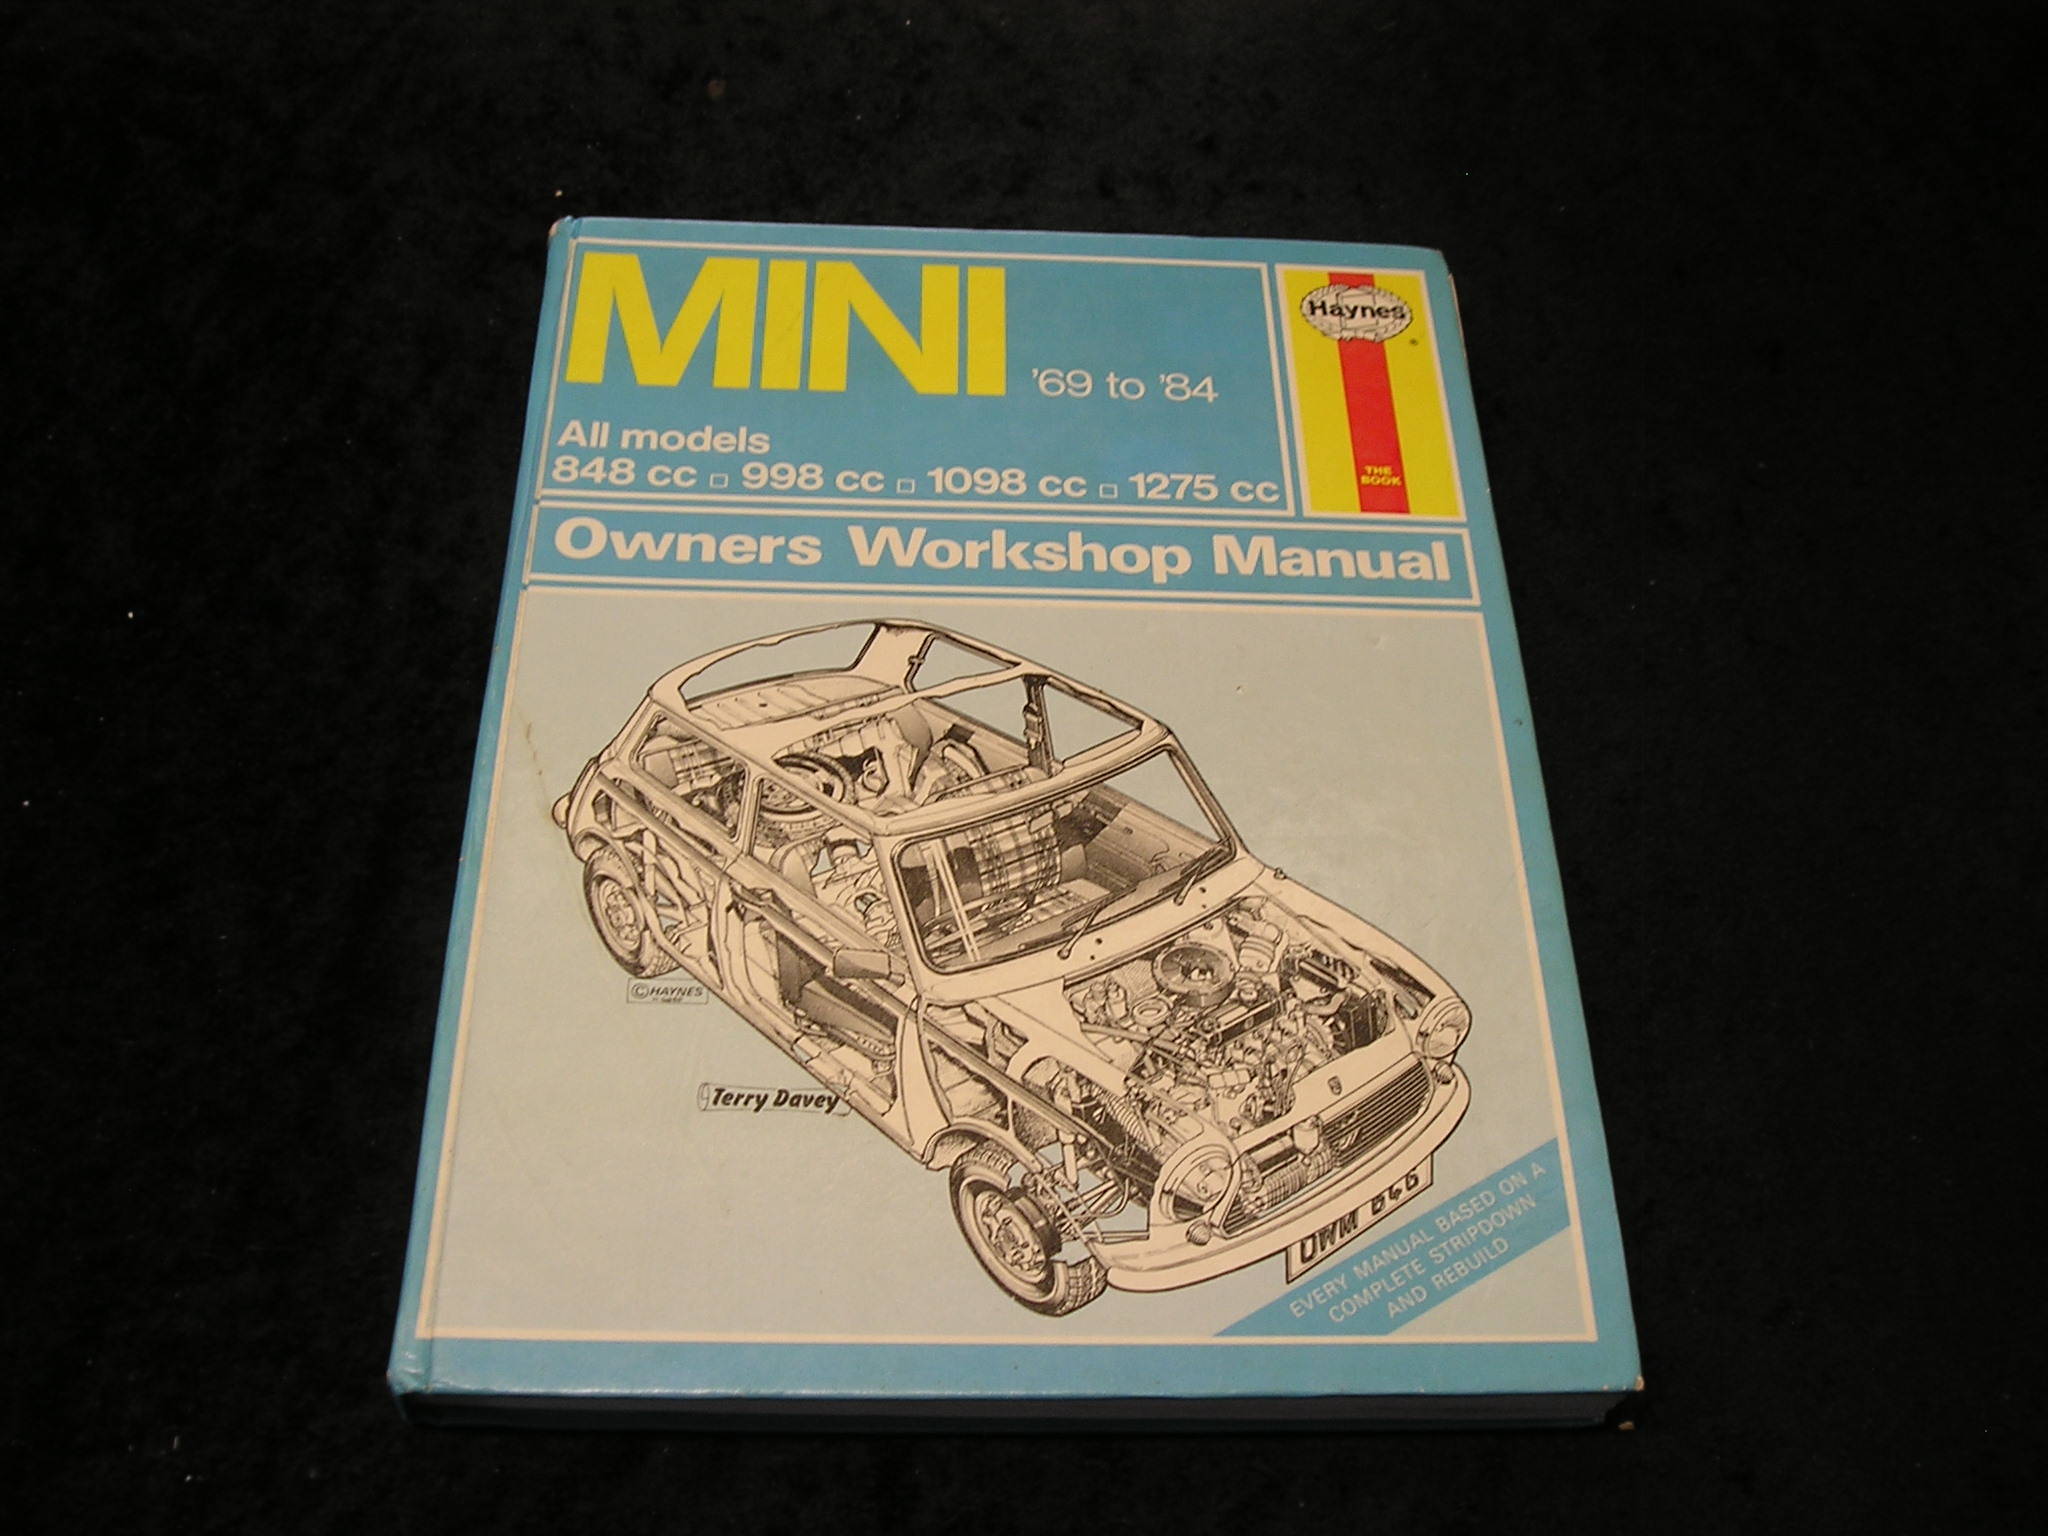 Mini '69 to '84 All Models 848cc, 998cc, 1098cc, 1275cc Owners Workshop Manual